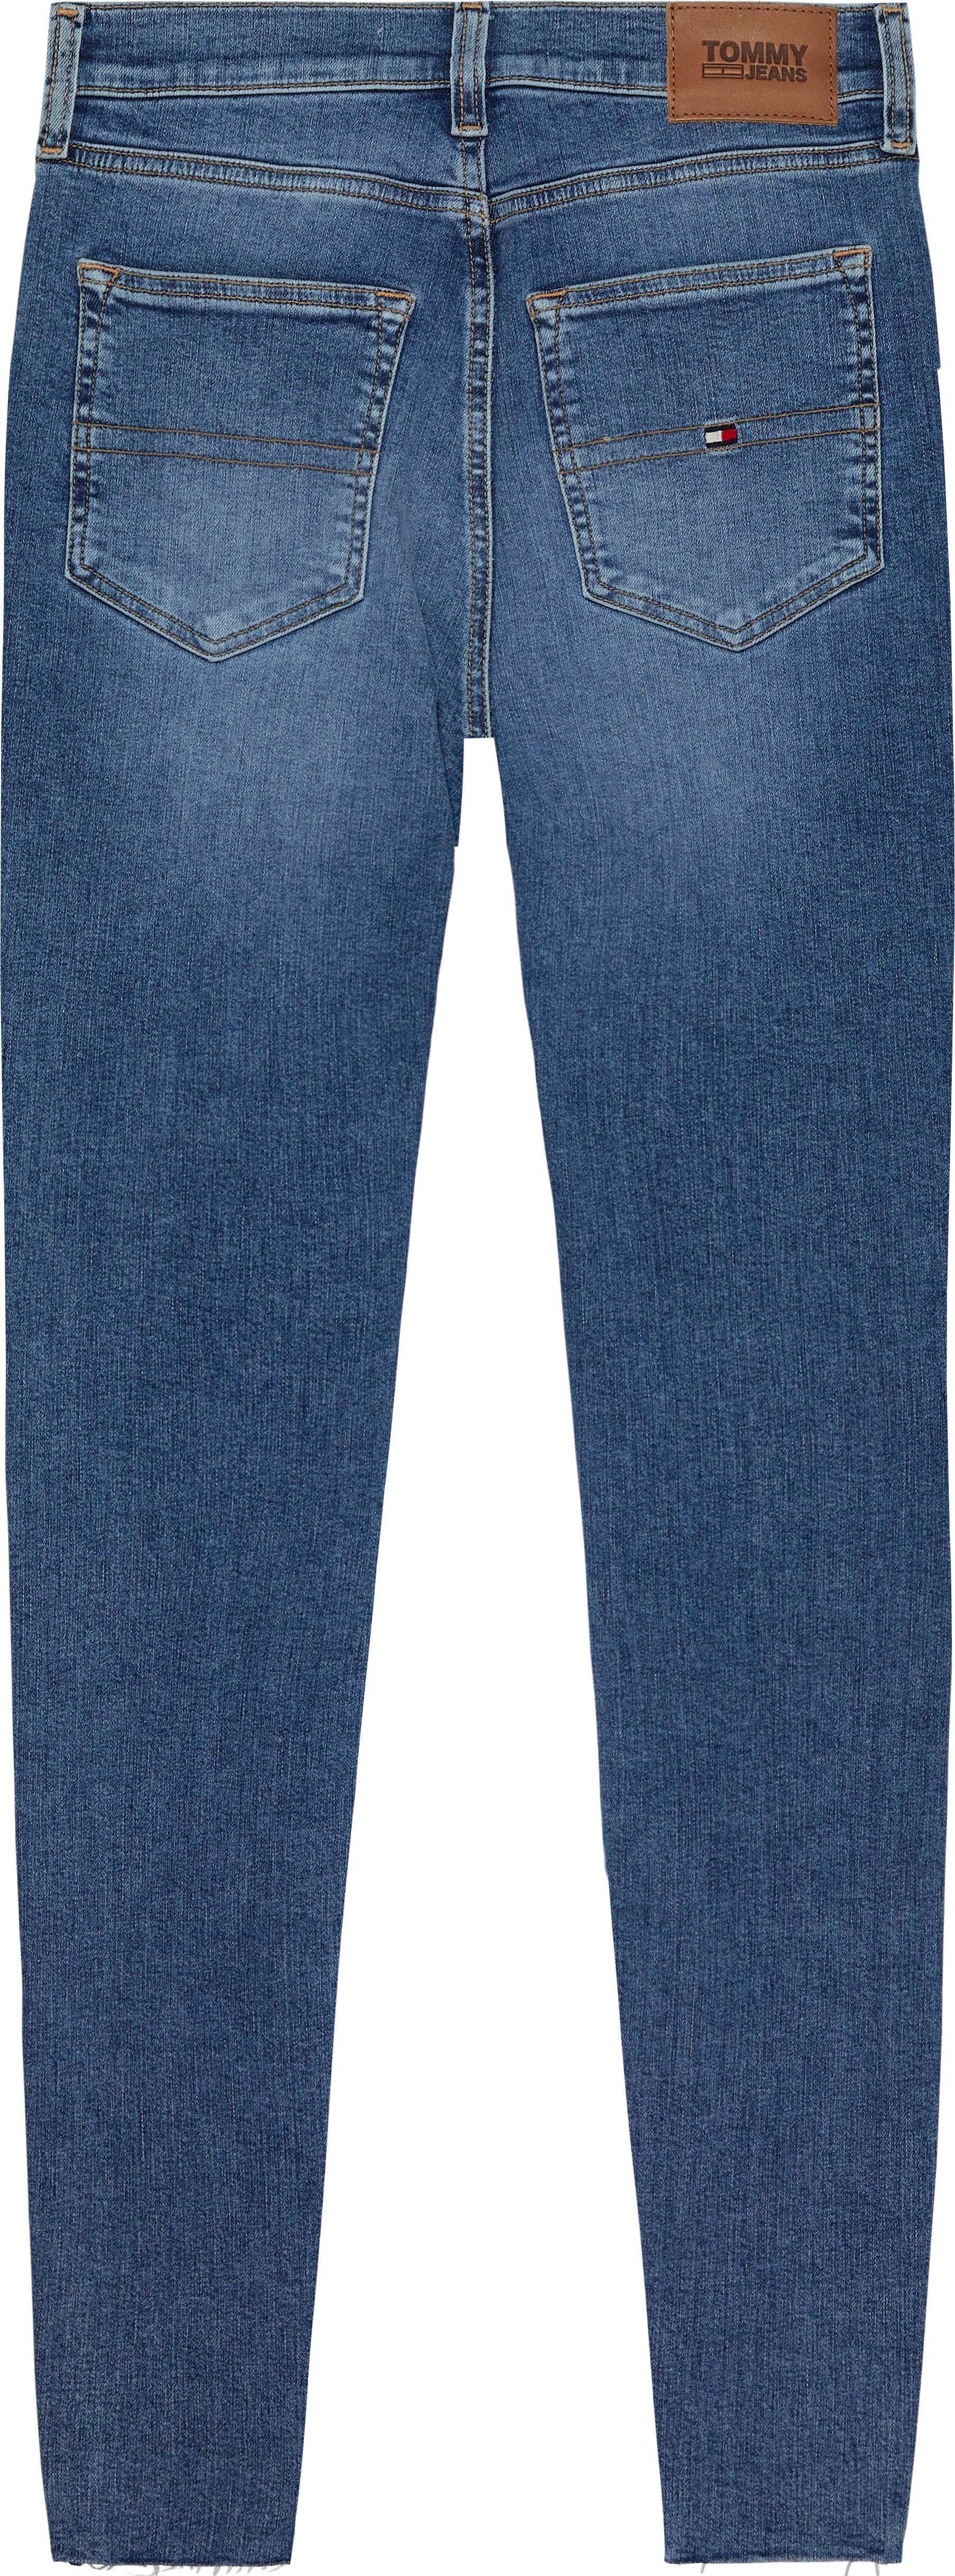 Labelflags SYLVIA HR Jeans SSKN Jeans denim_medium1 mit CG4 und Tommy Skinny-fit-Jeans Logobadge